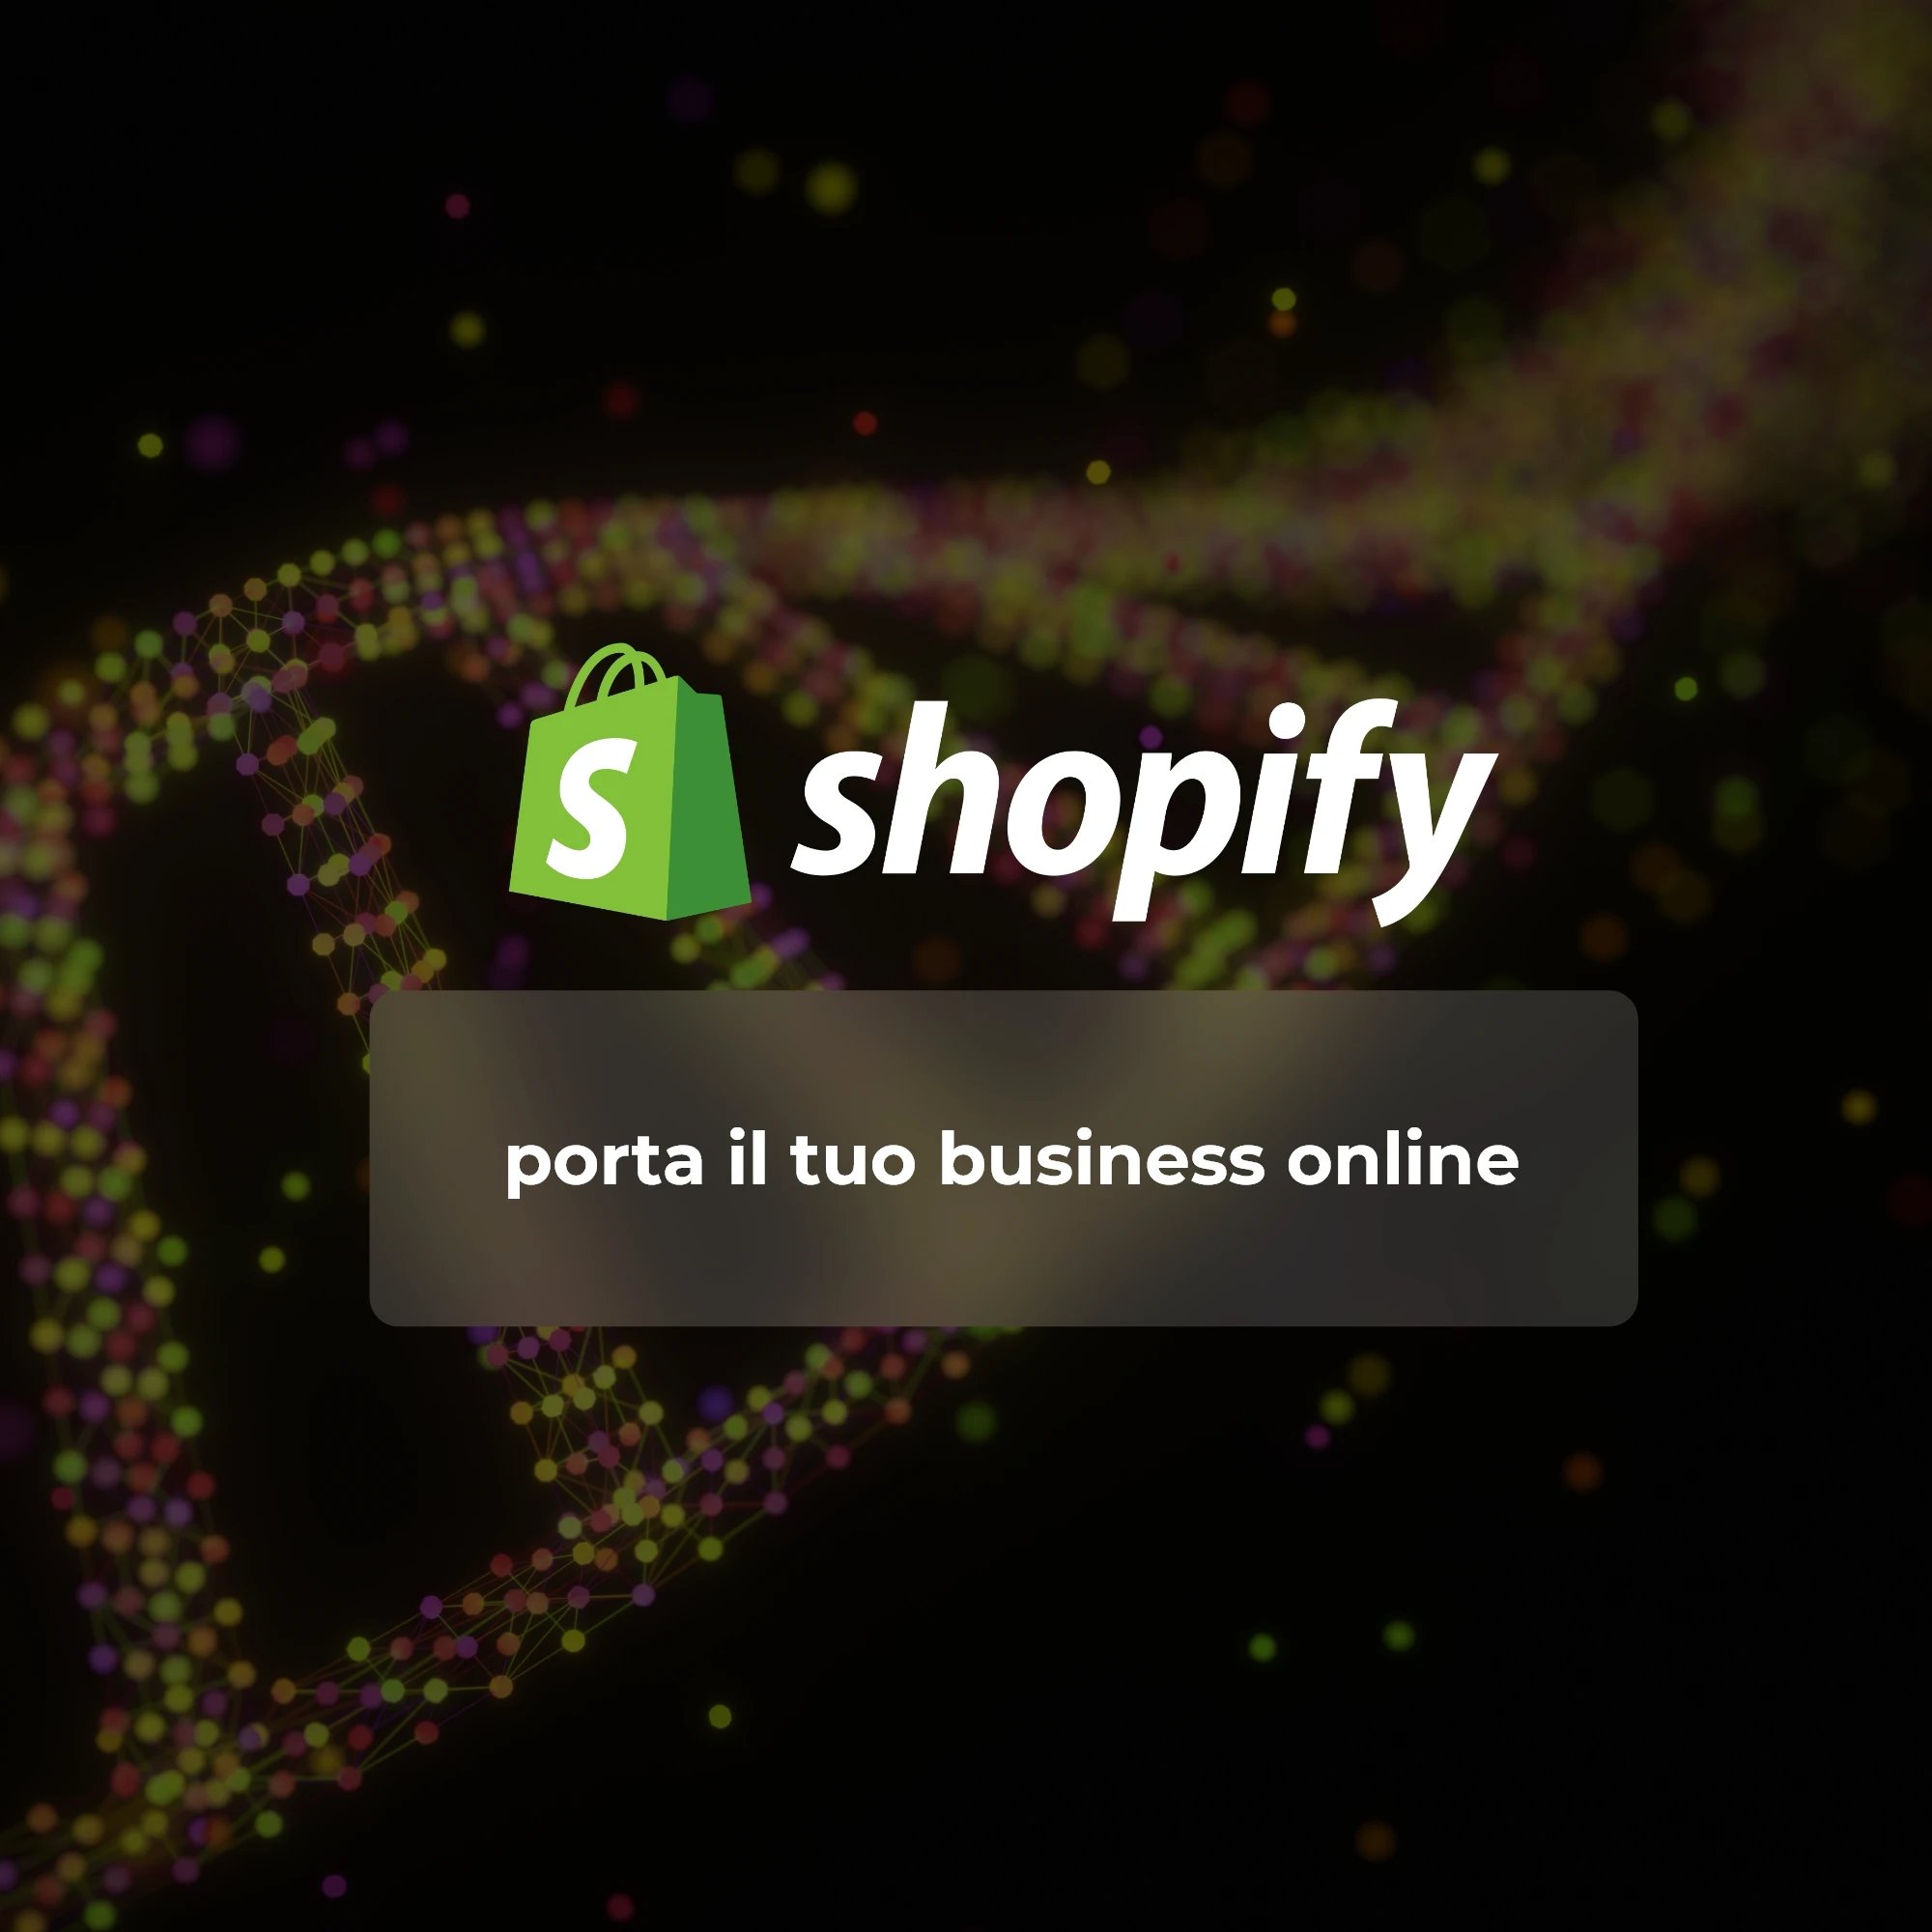 Il nostro partner’s ecosystem_SHopify W.Claim – 2